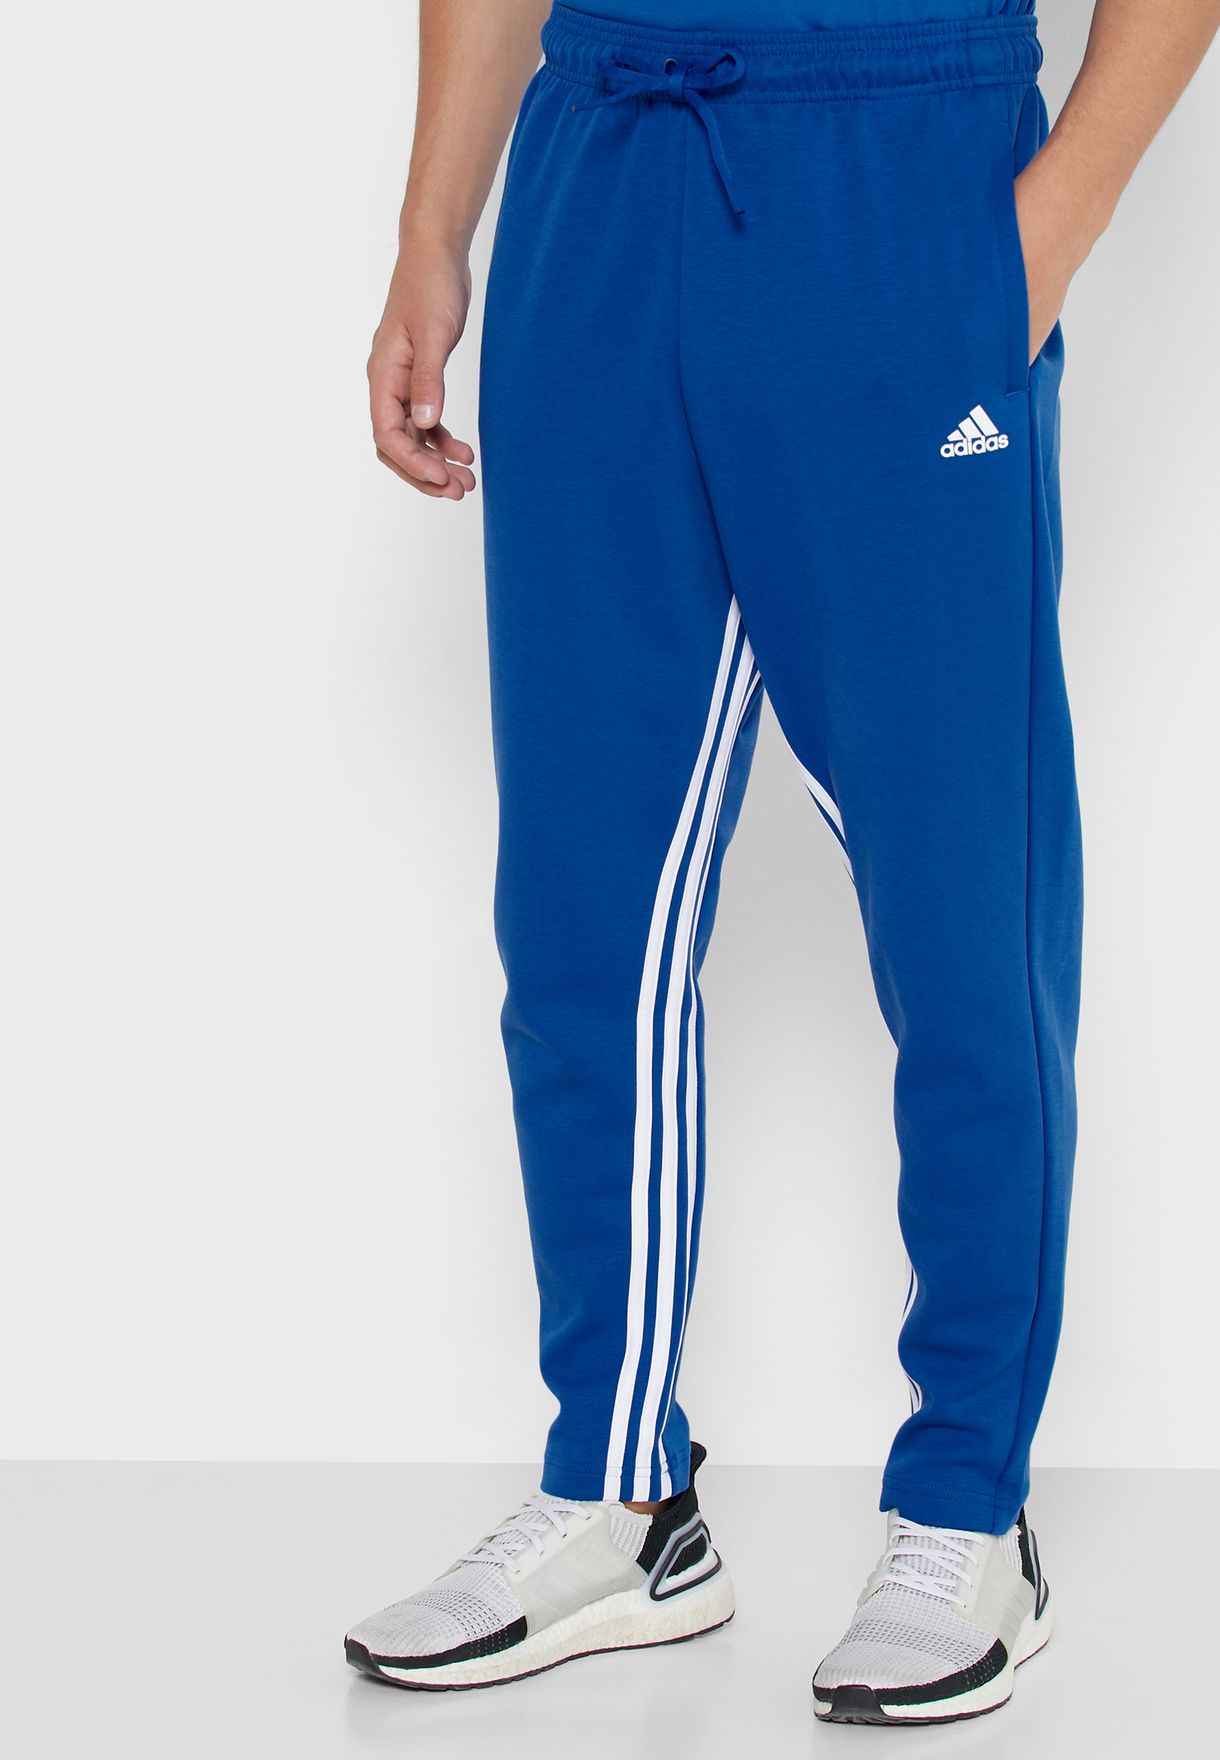 adidas blue track pants